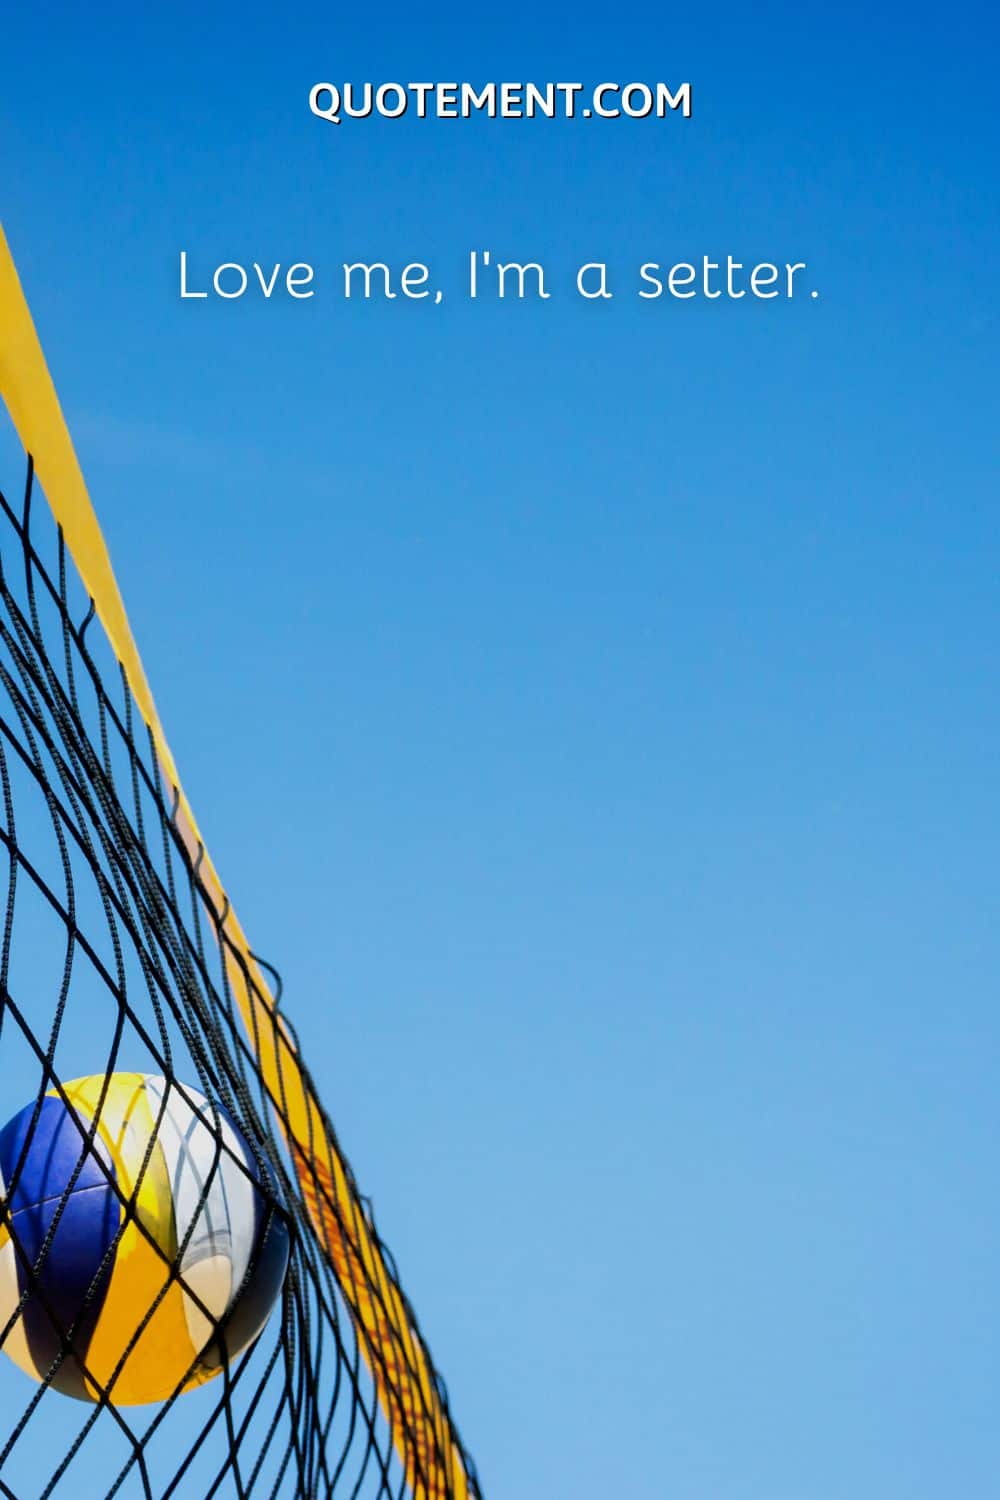 Love me, I’m a setter.